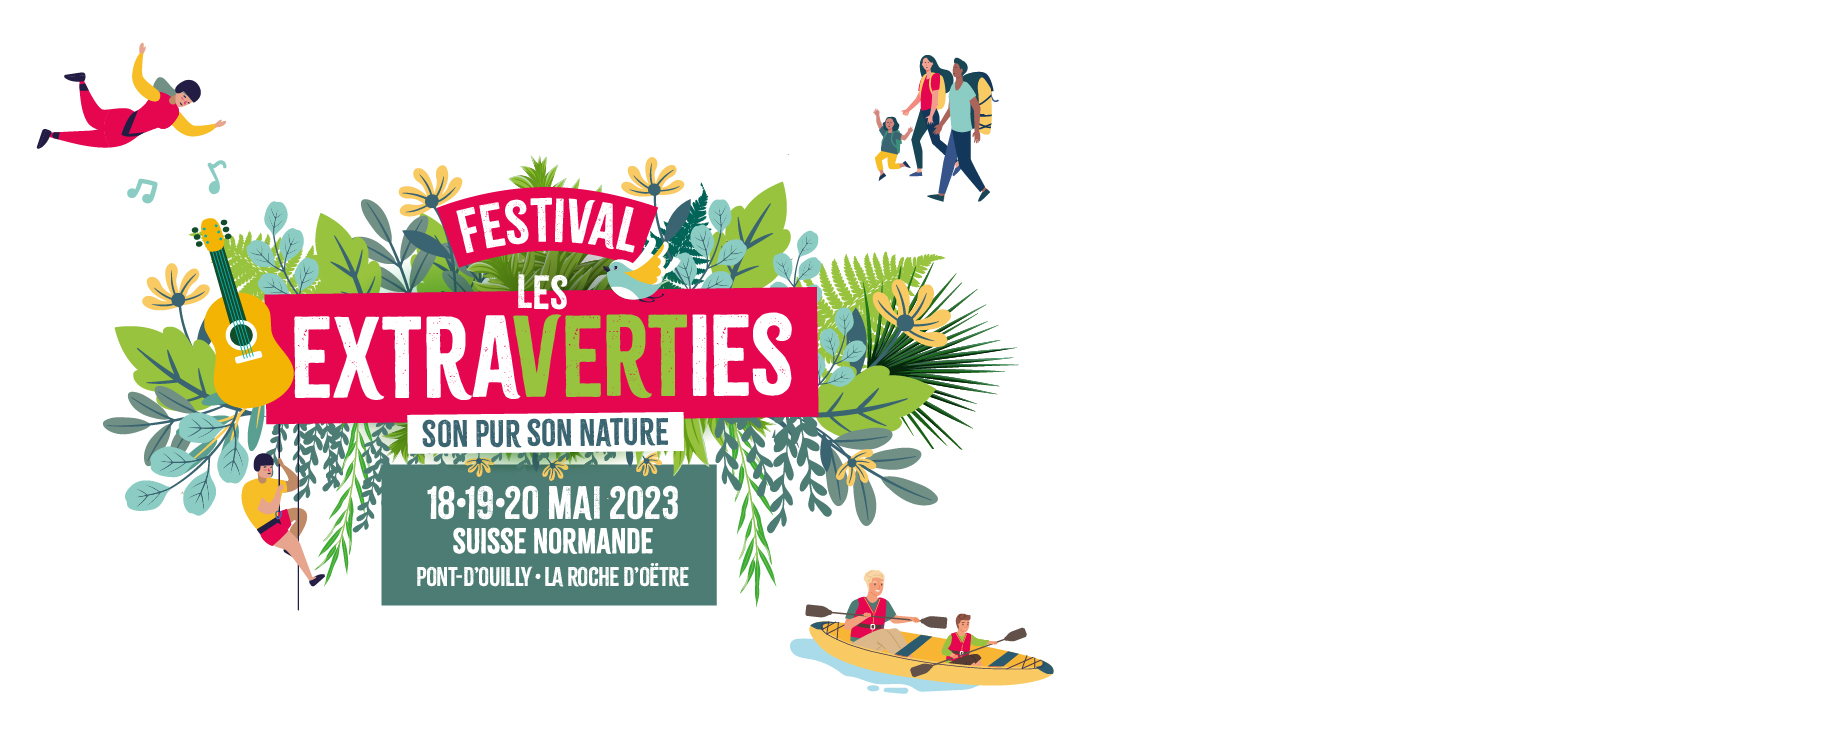 Les ExtraVerties Festival in Suisse Normande